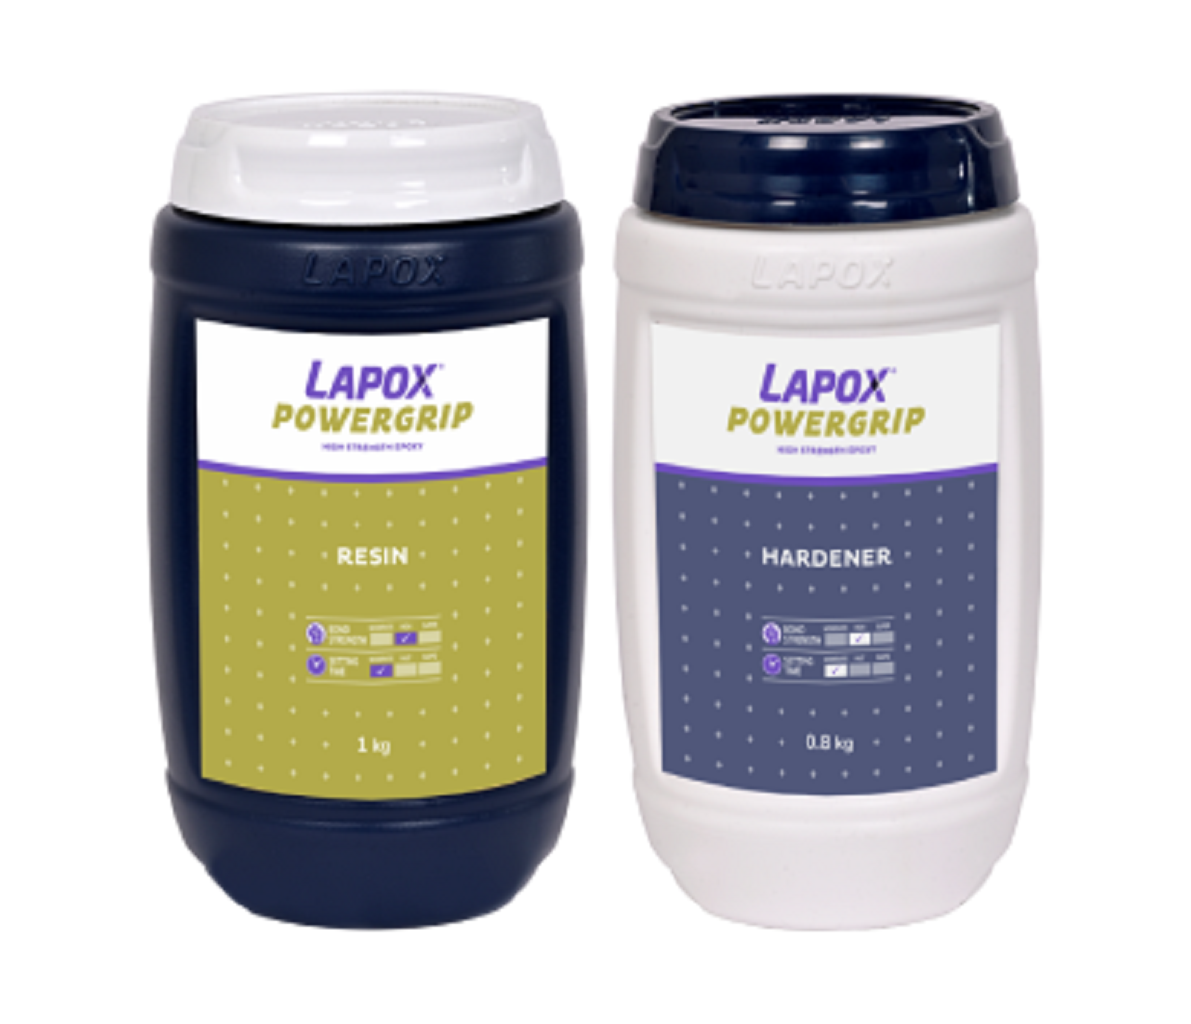 Lapox Powergrip Two-Component Modified Epoxy Adhesive